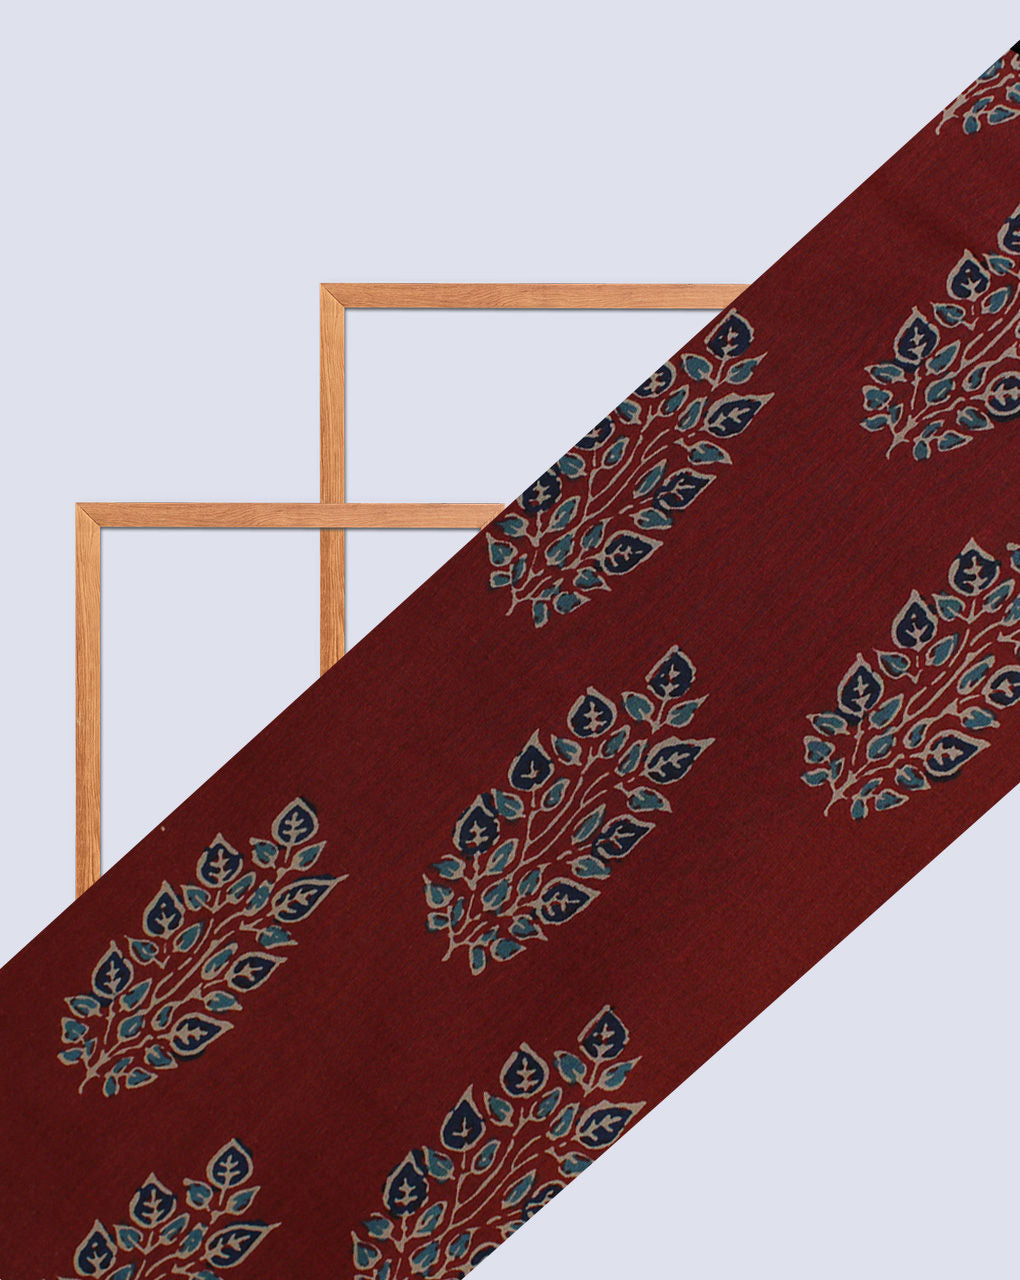 Maroon Leaf Design Printed Cotton Fabric